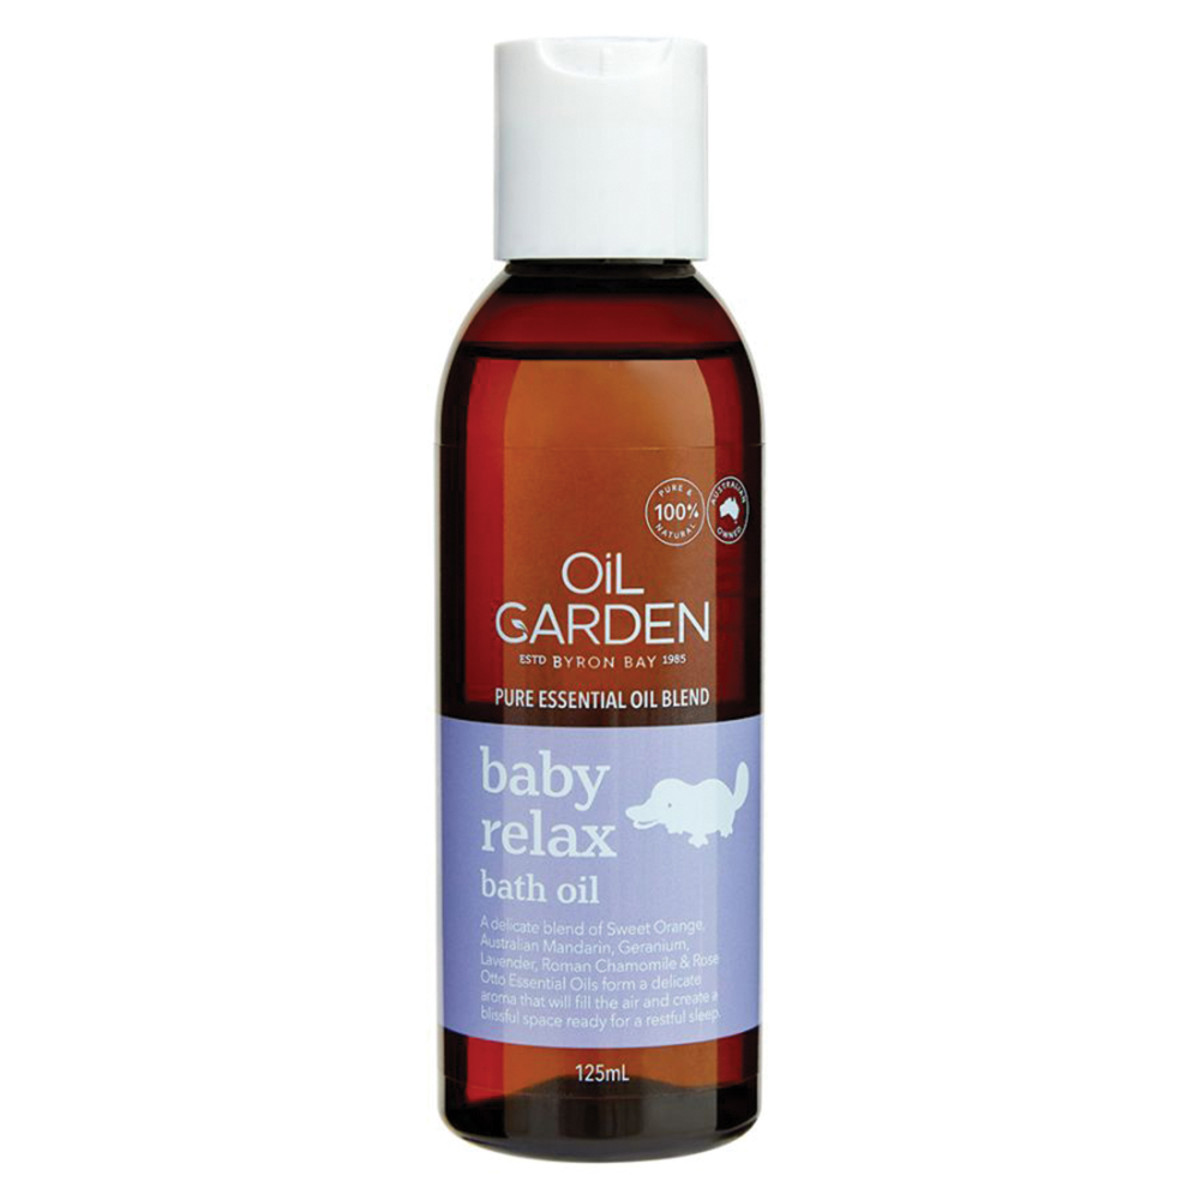 Oil Garden Baby Bath Oil Baby Relax 125ml_media-01